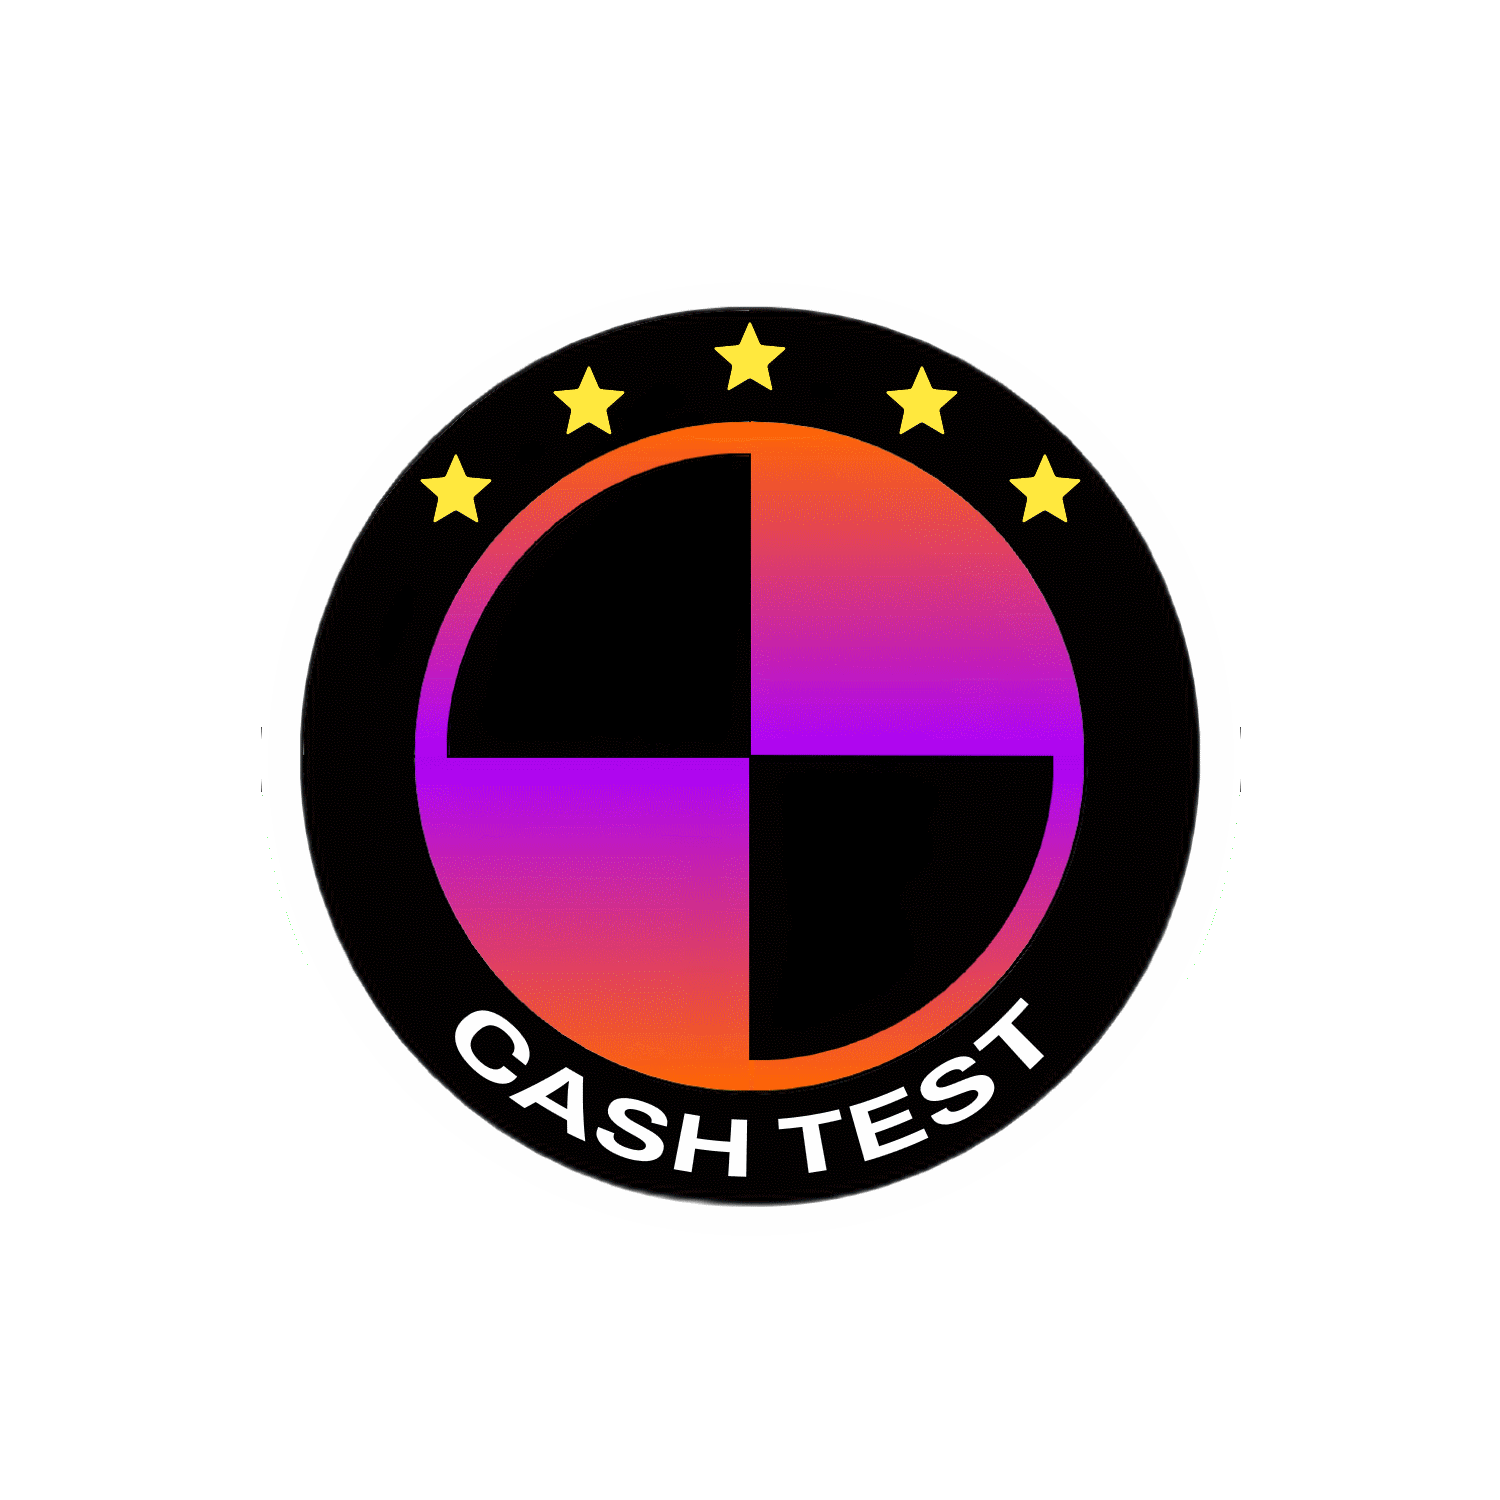 logo cash-test